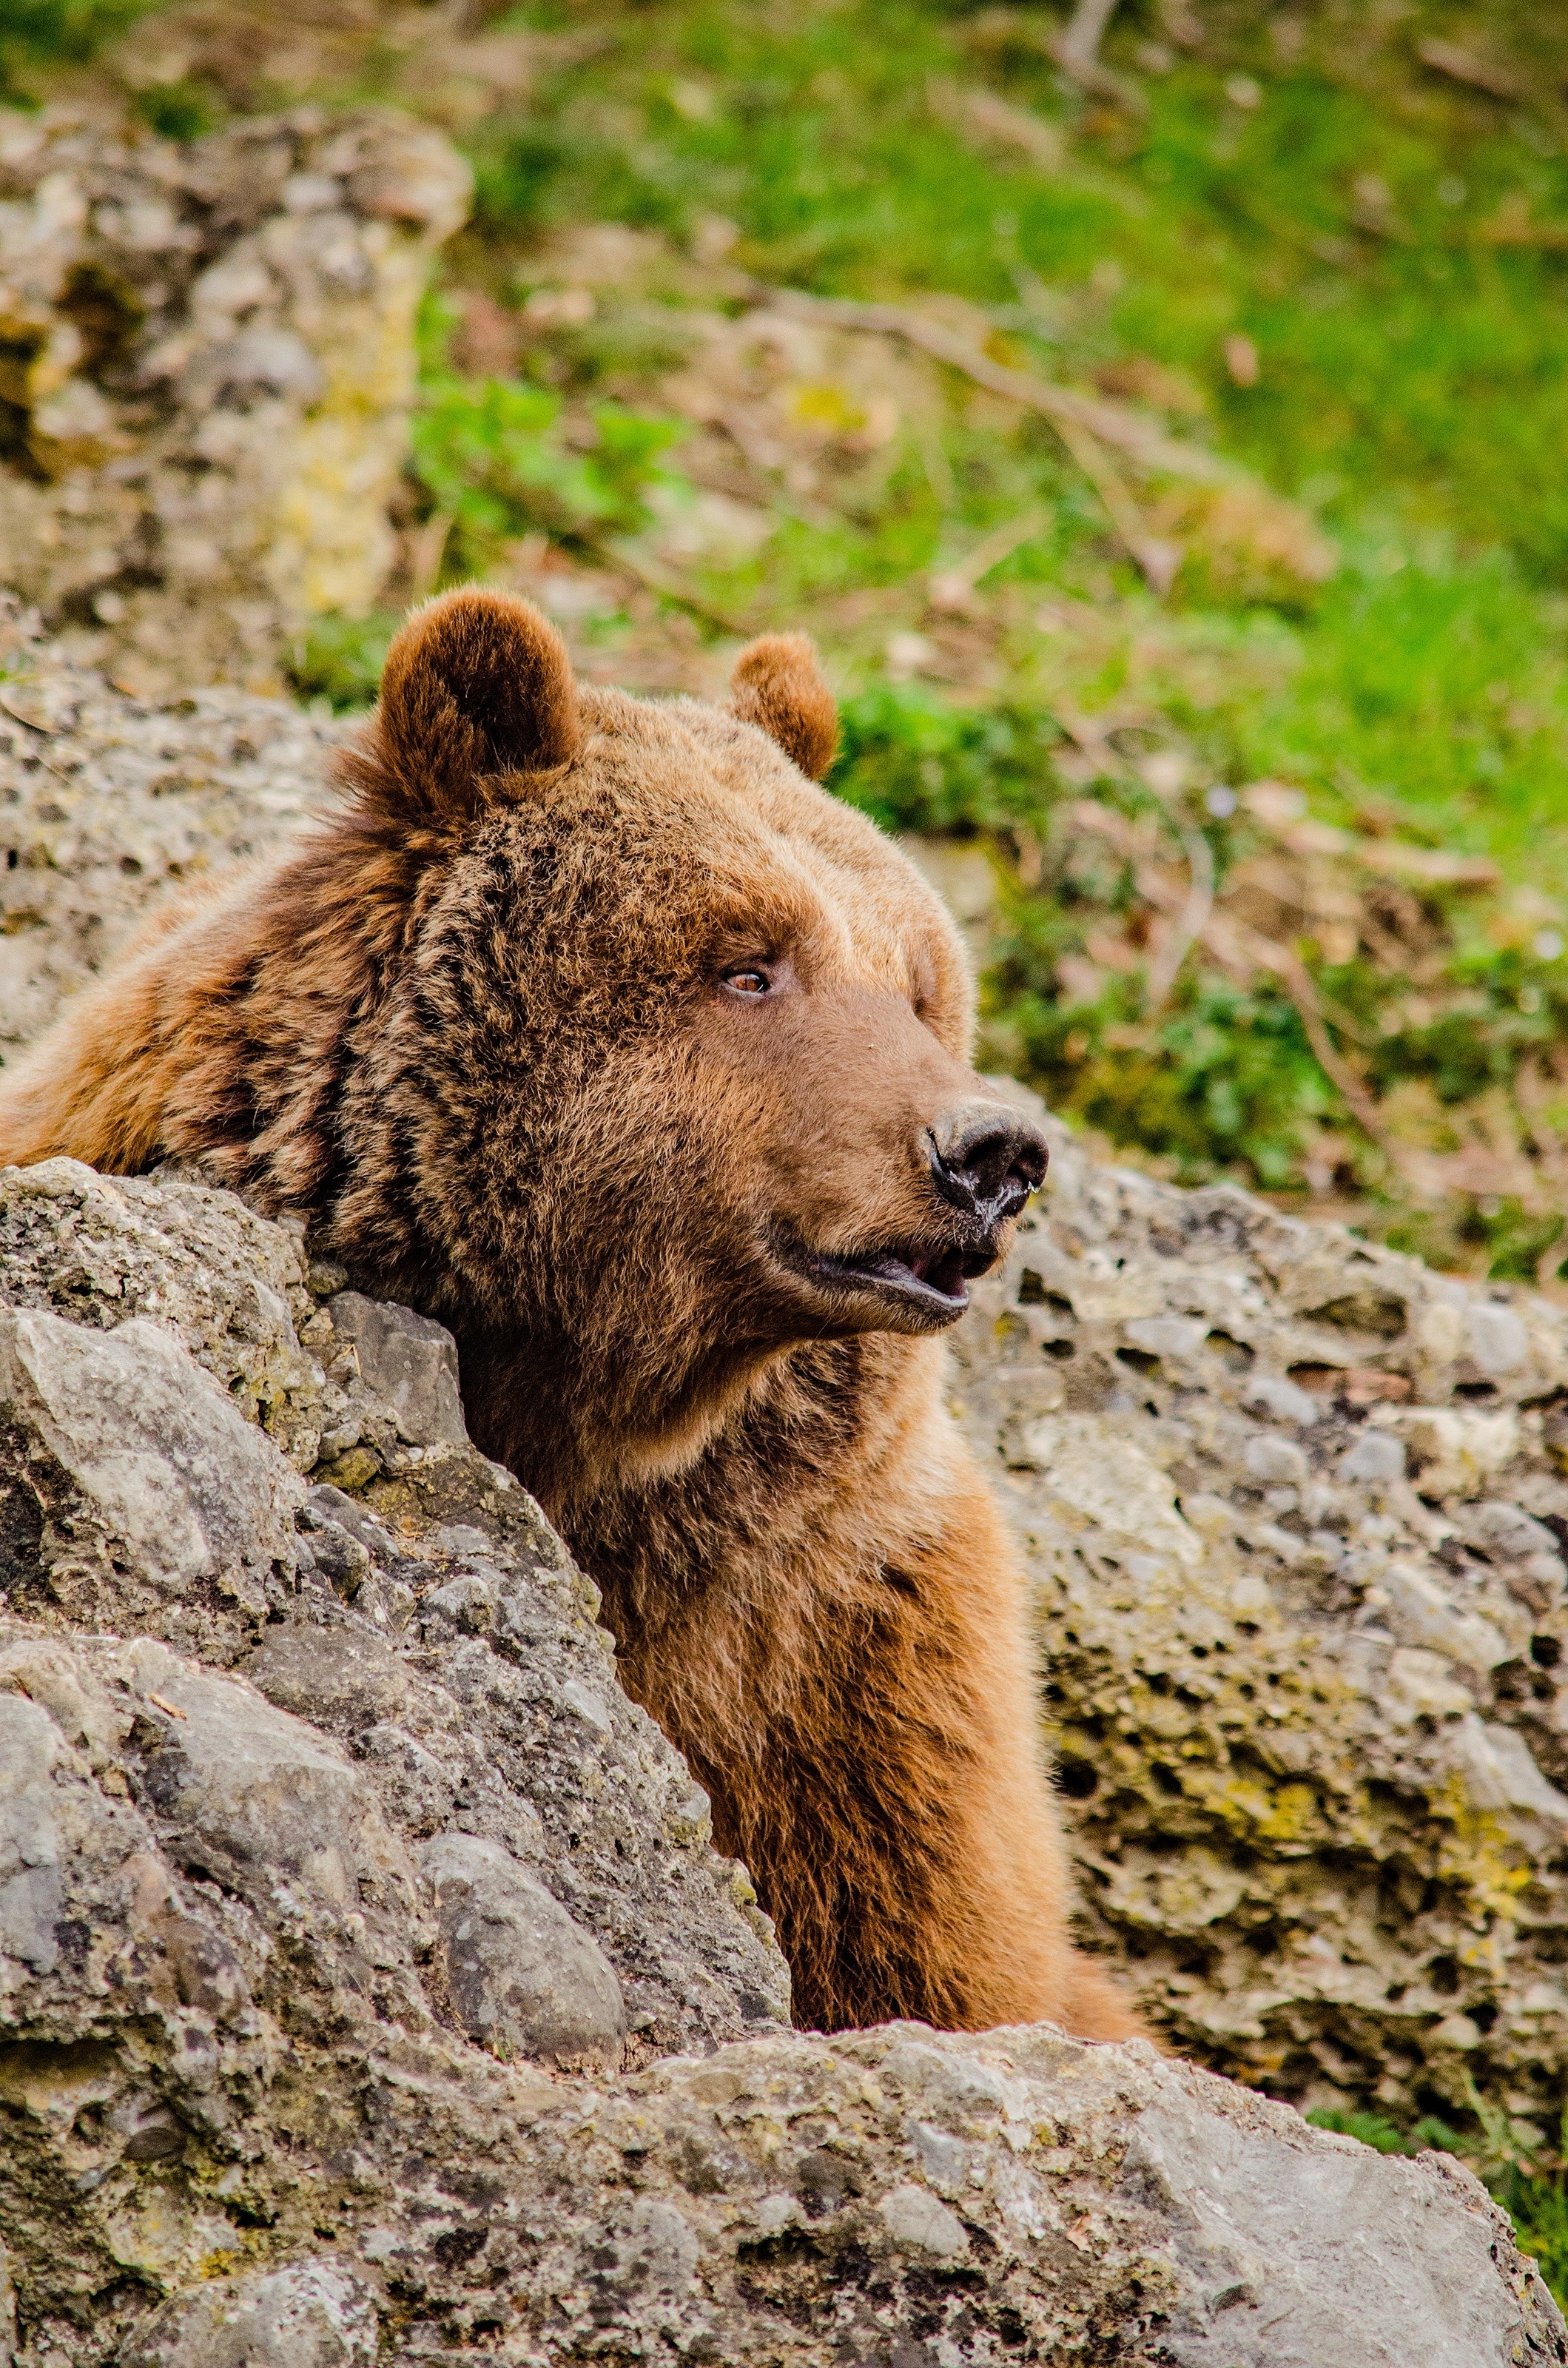 Fur, Brown Bear, Zoo, Predator, Bear, rock - object, animals in the wild